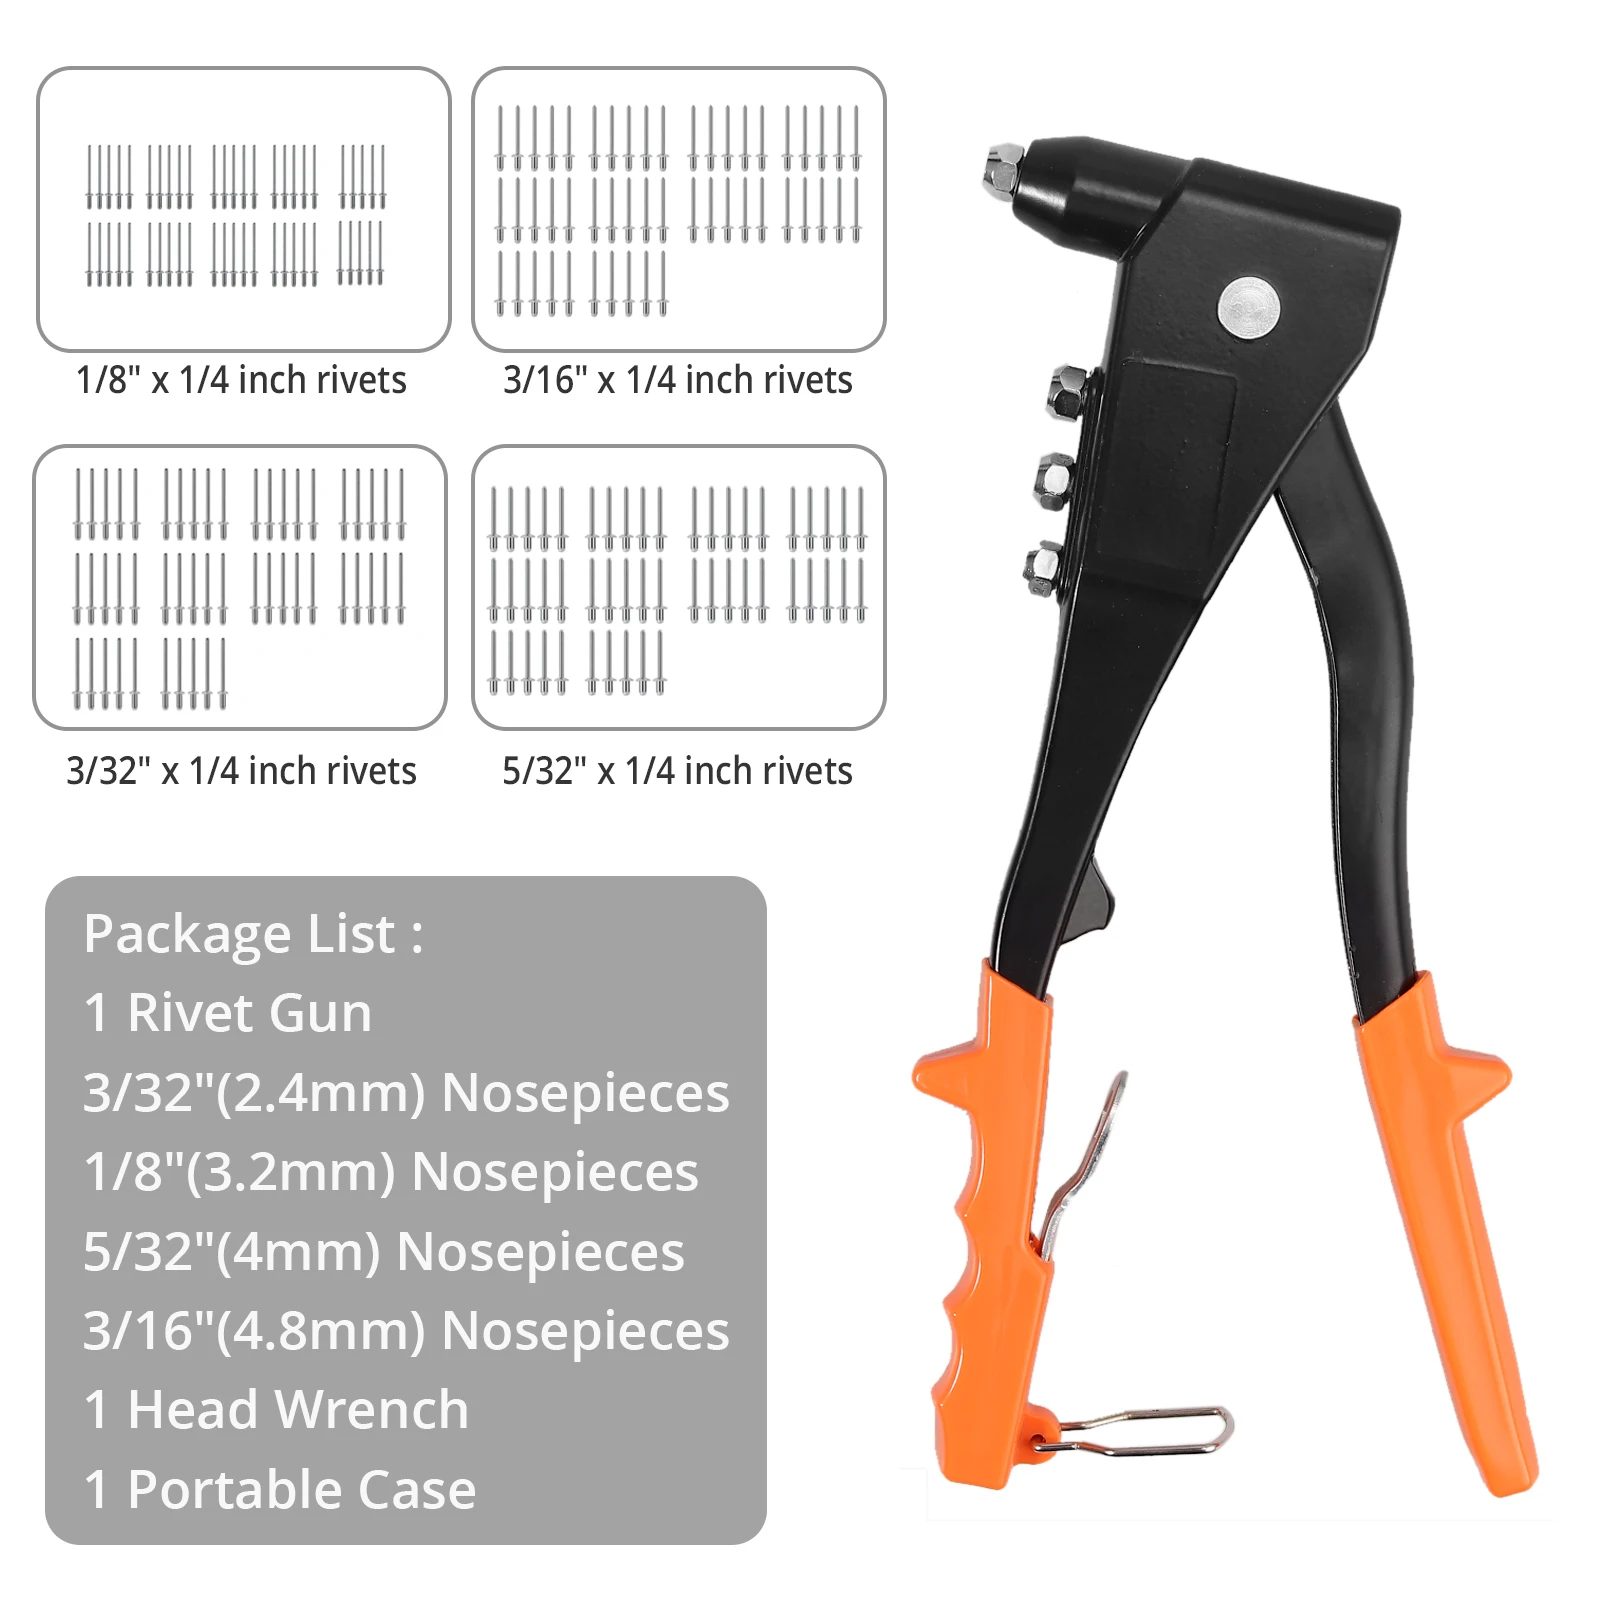 Heavy Duty Riveter Set Professional Hand Rivet Gun Kit DIY Tools With 200  Rivets 2.4mm 3.2mm 4.0mm 4.8mm Rivet Nut Home Tool - AliExpress